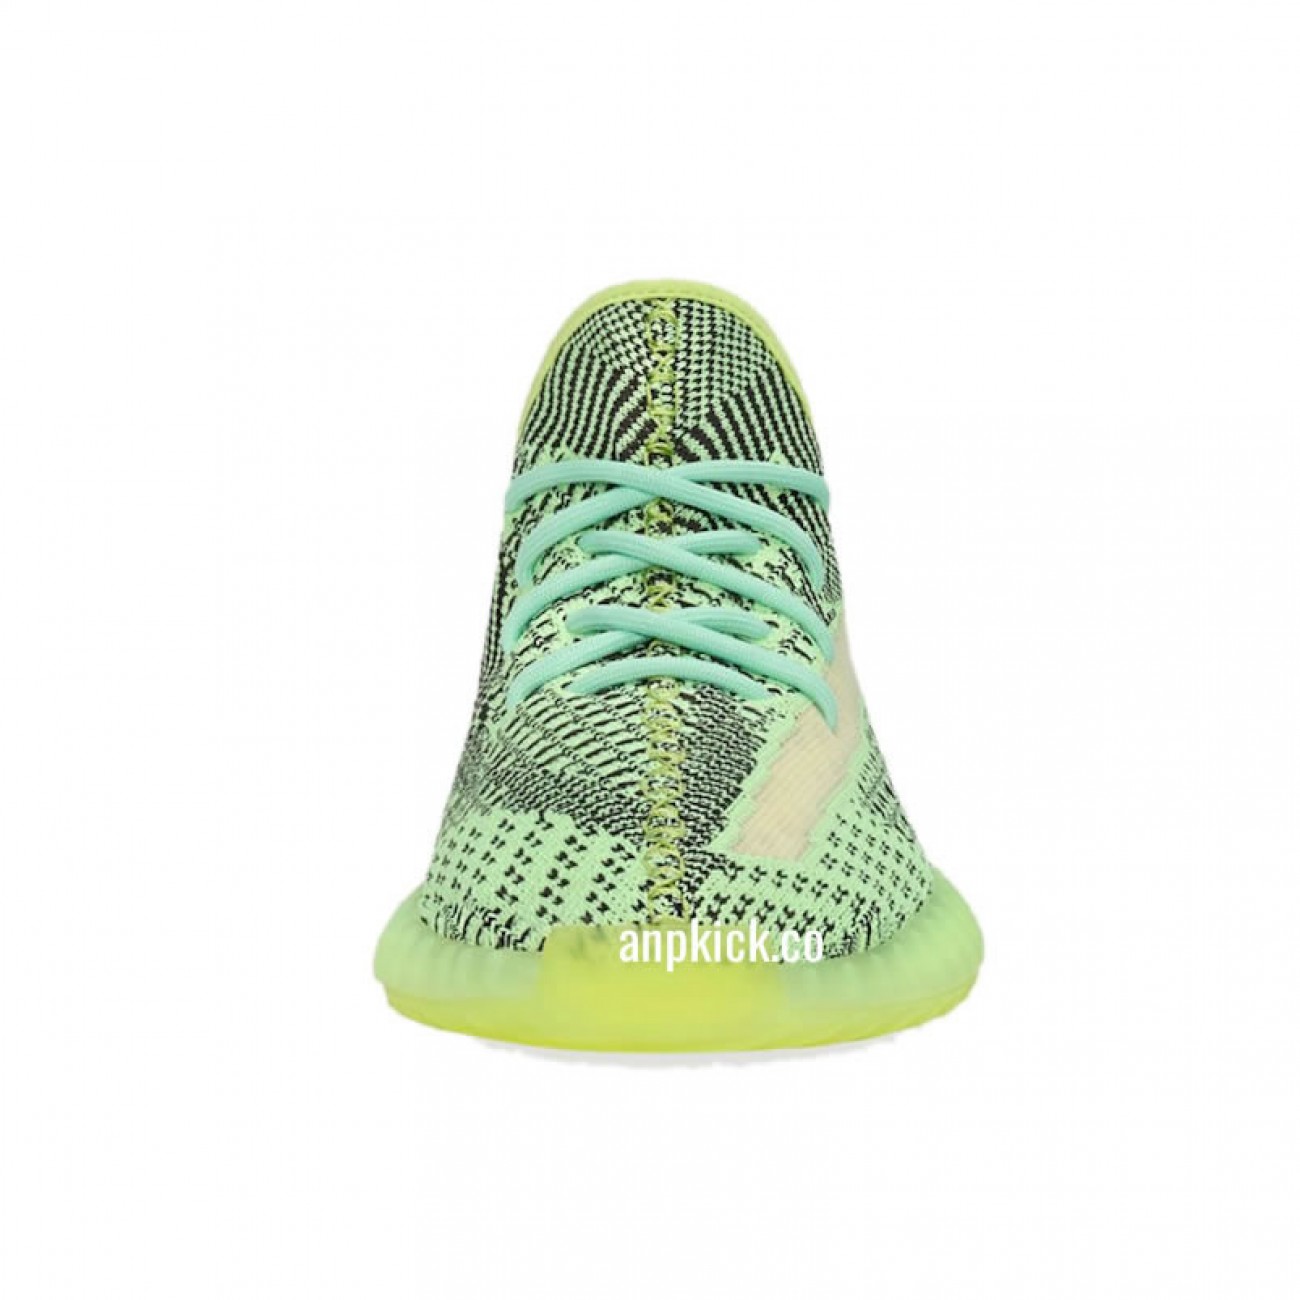 adidas Yeezy Boost 350 V2 "Yeezreel" Reflective Green Black Release Date FX4130